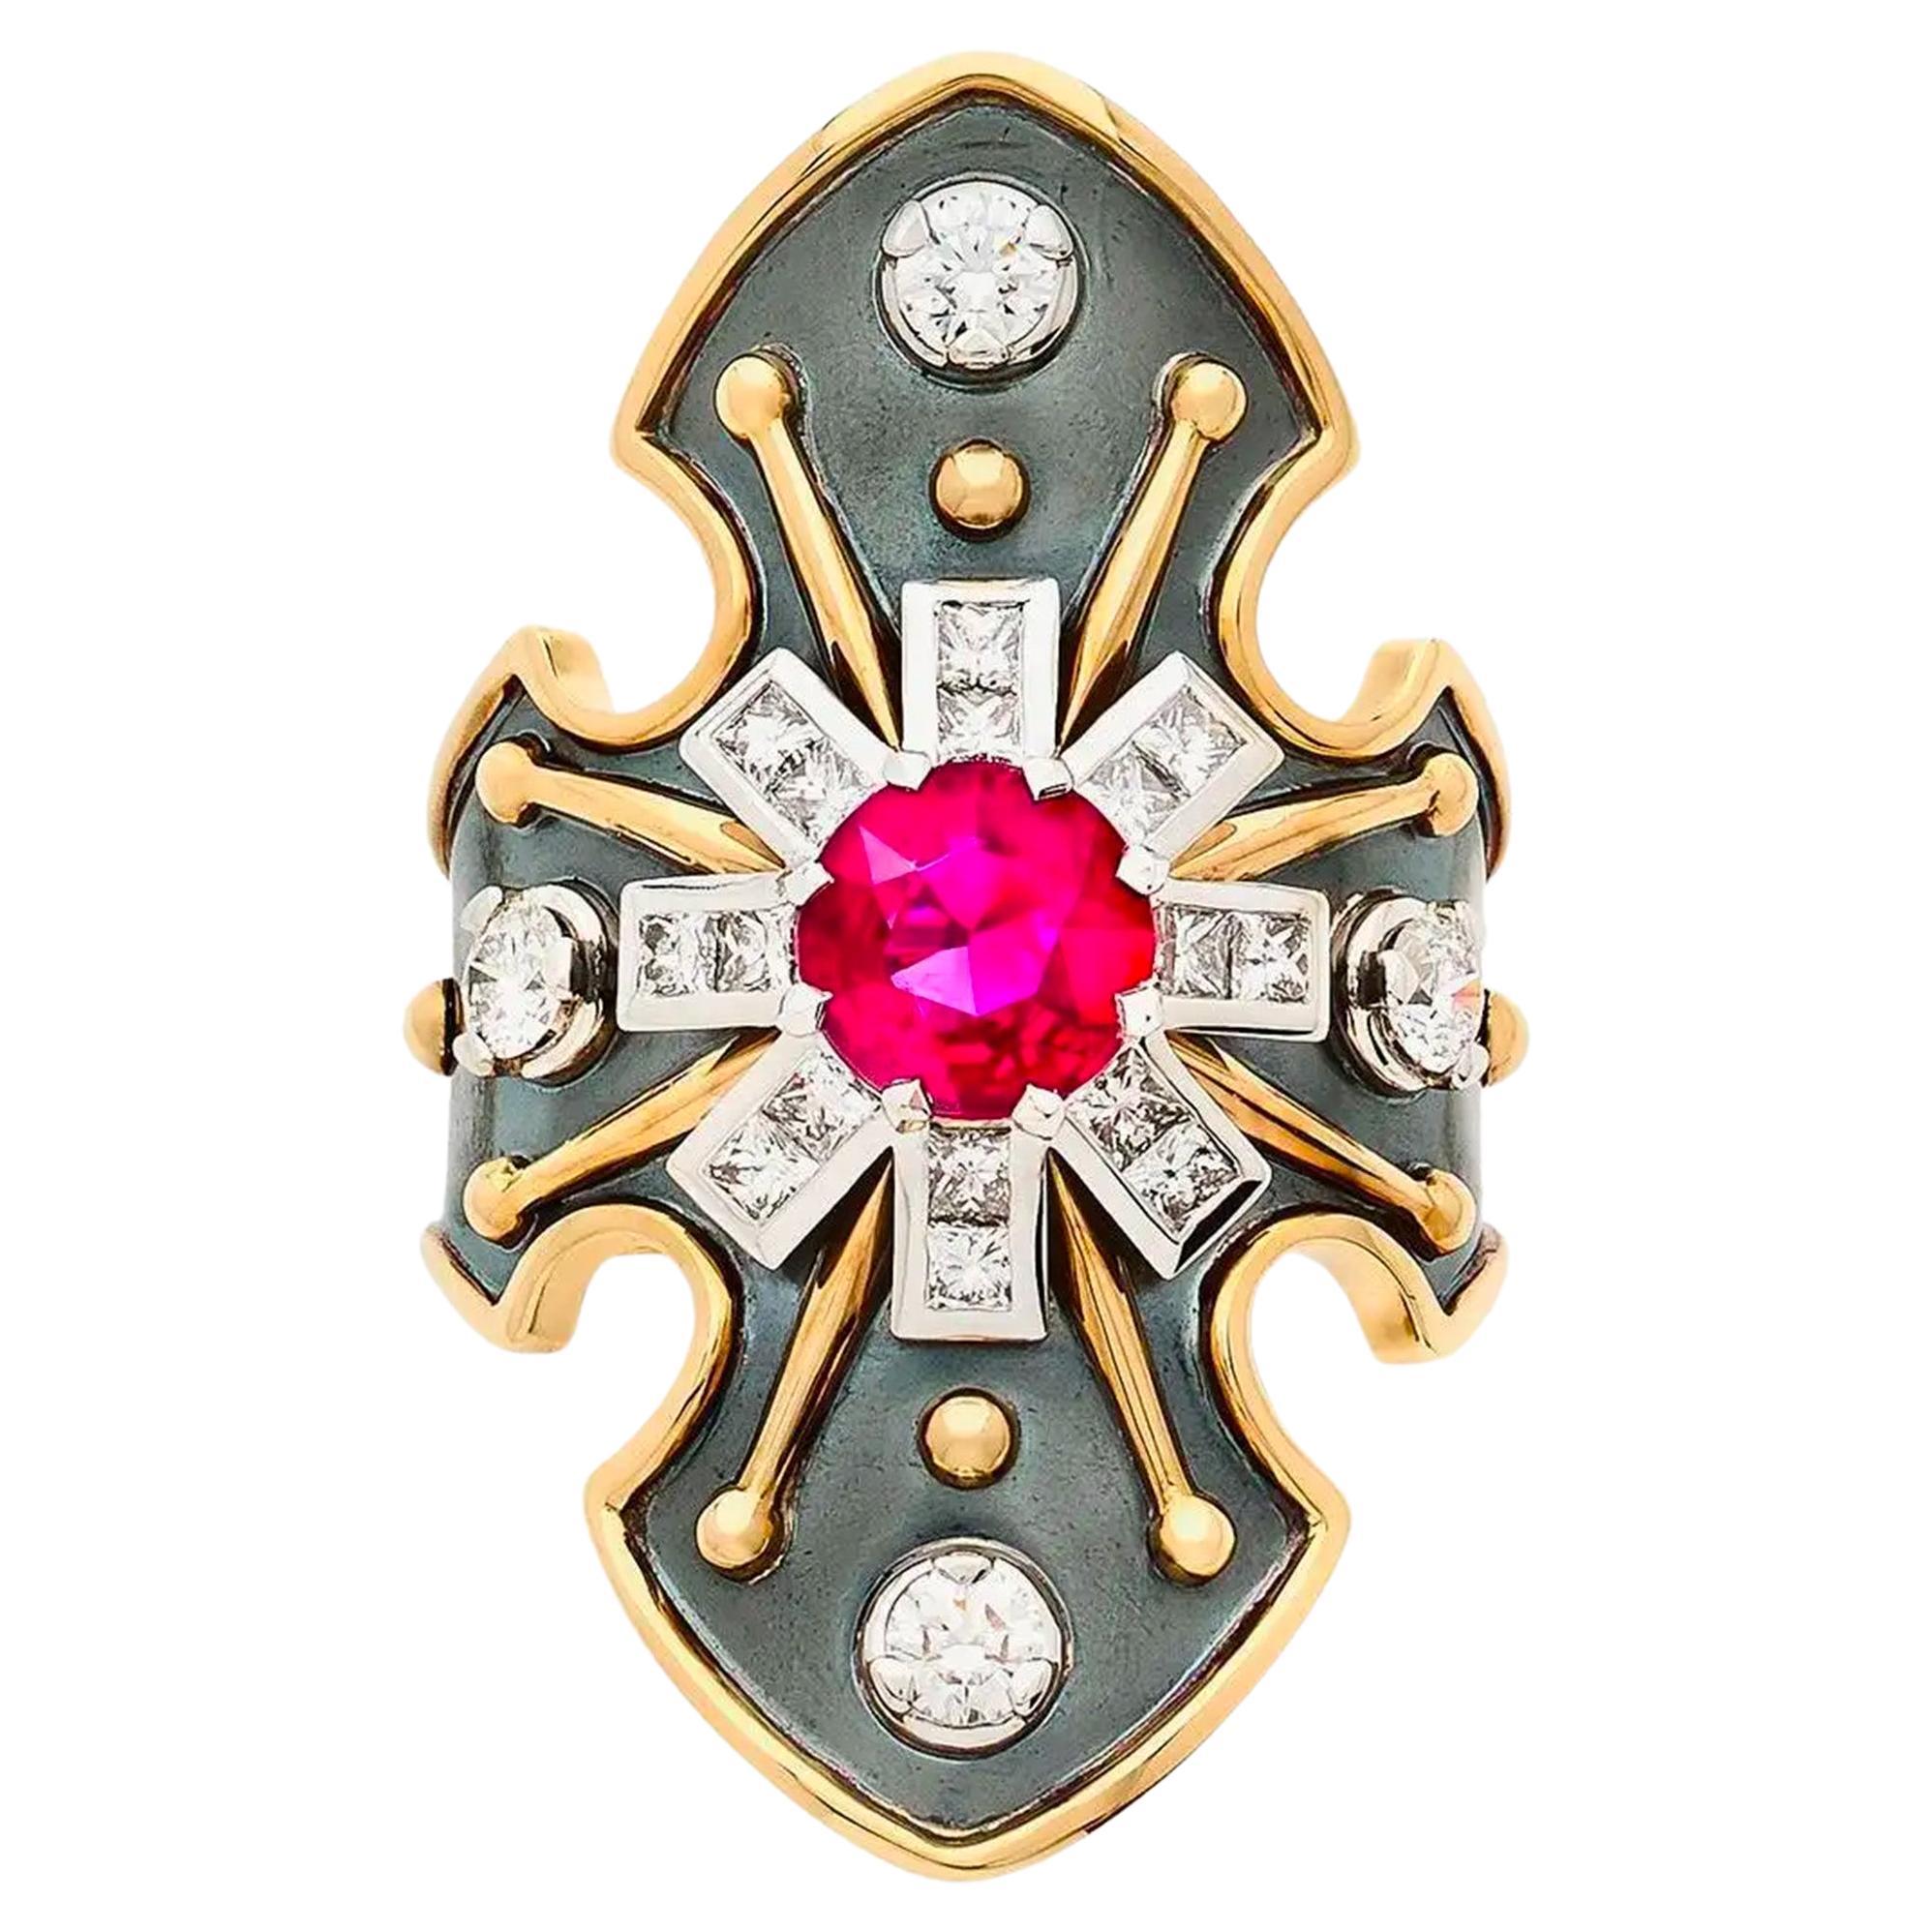 Princess Burmese Ruby & Diamonds Bouclier Ring 18k Gold by Elie Top